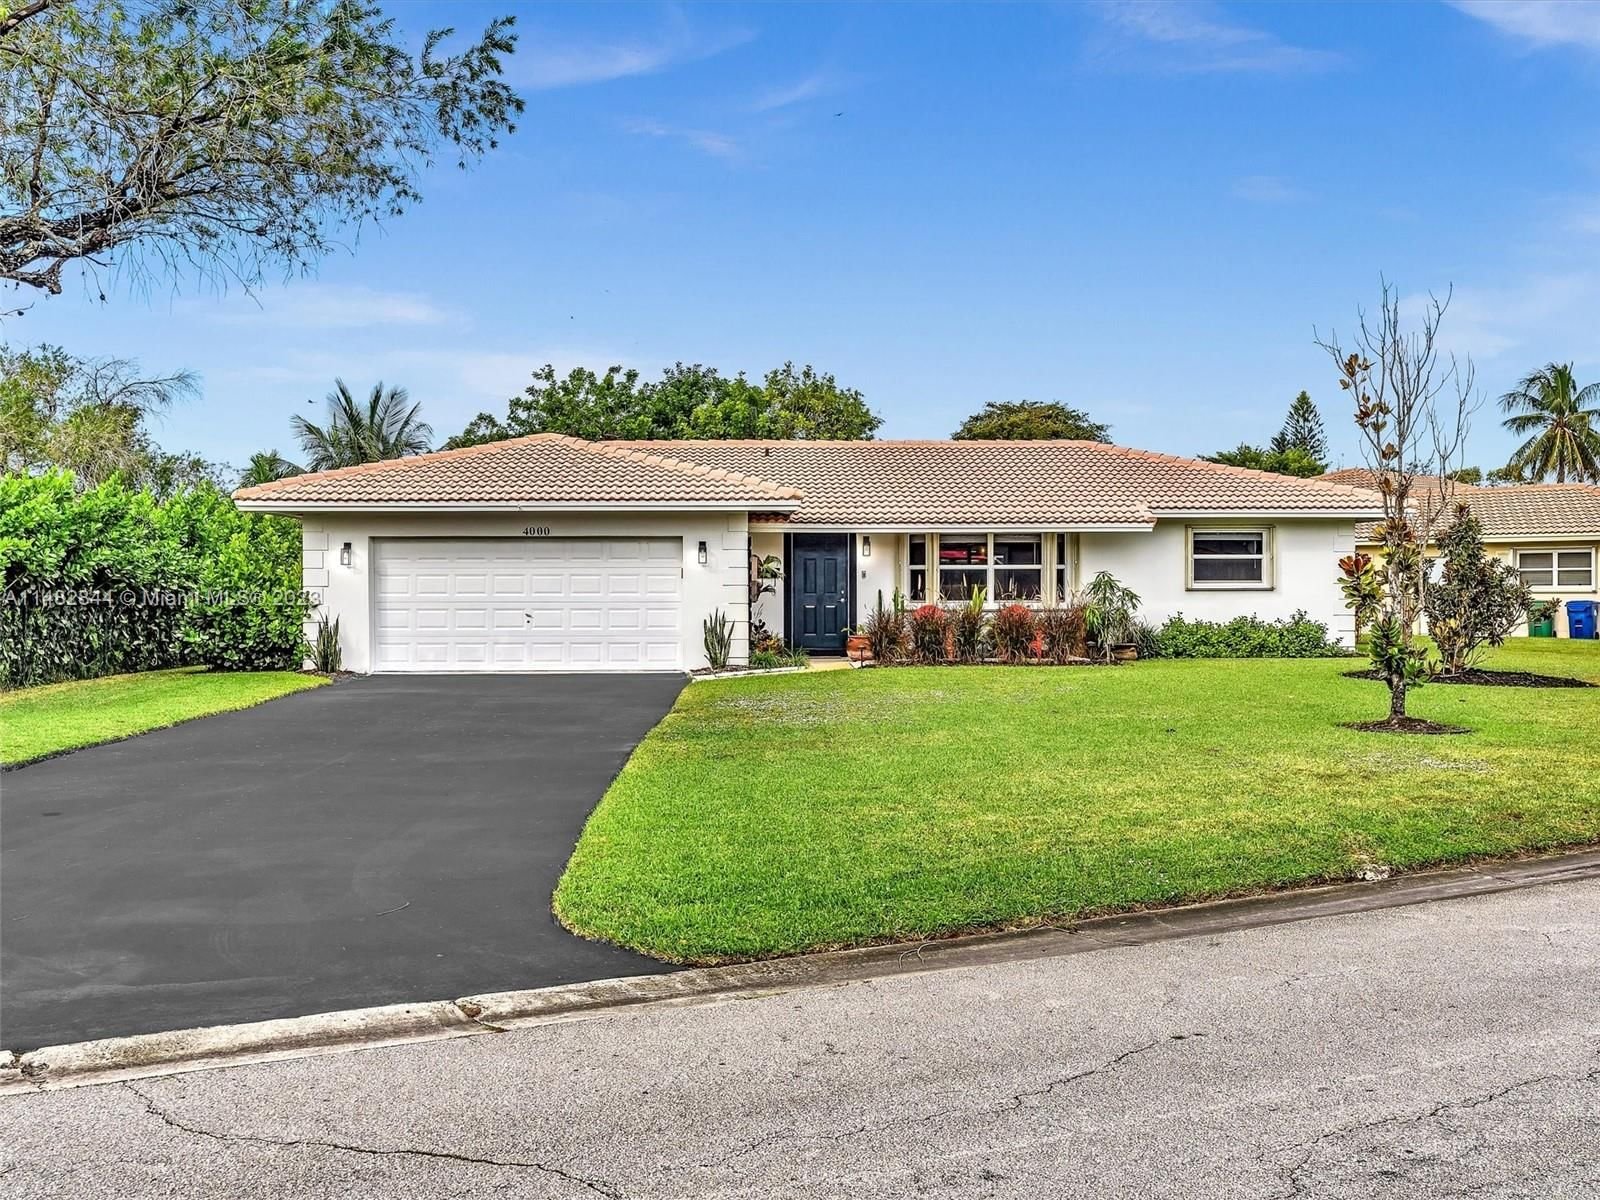 Real estate property located at 4000 103rd Dr, Broward County, DEER RUN SPRINGS, Coral Springs, FL